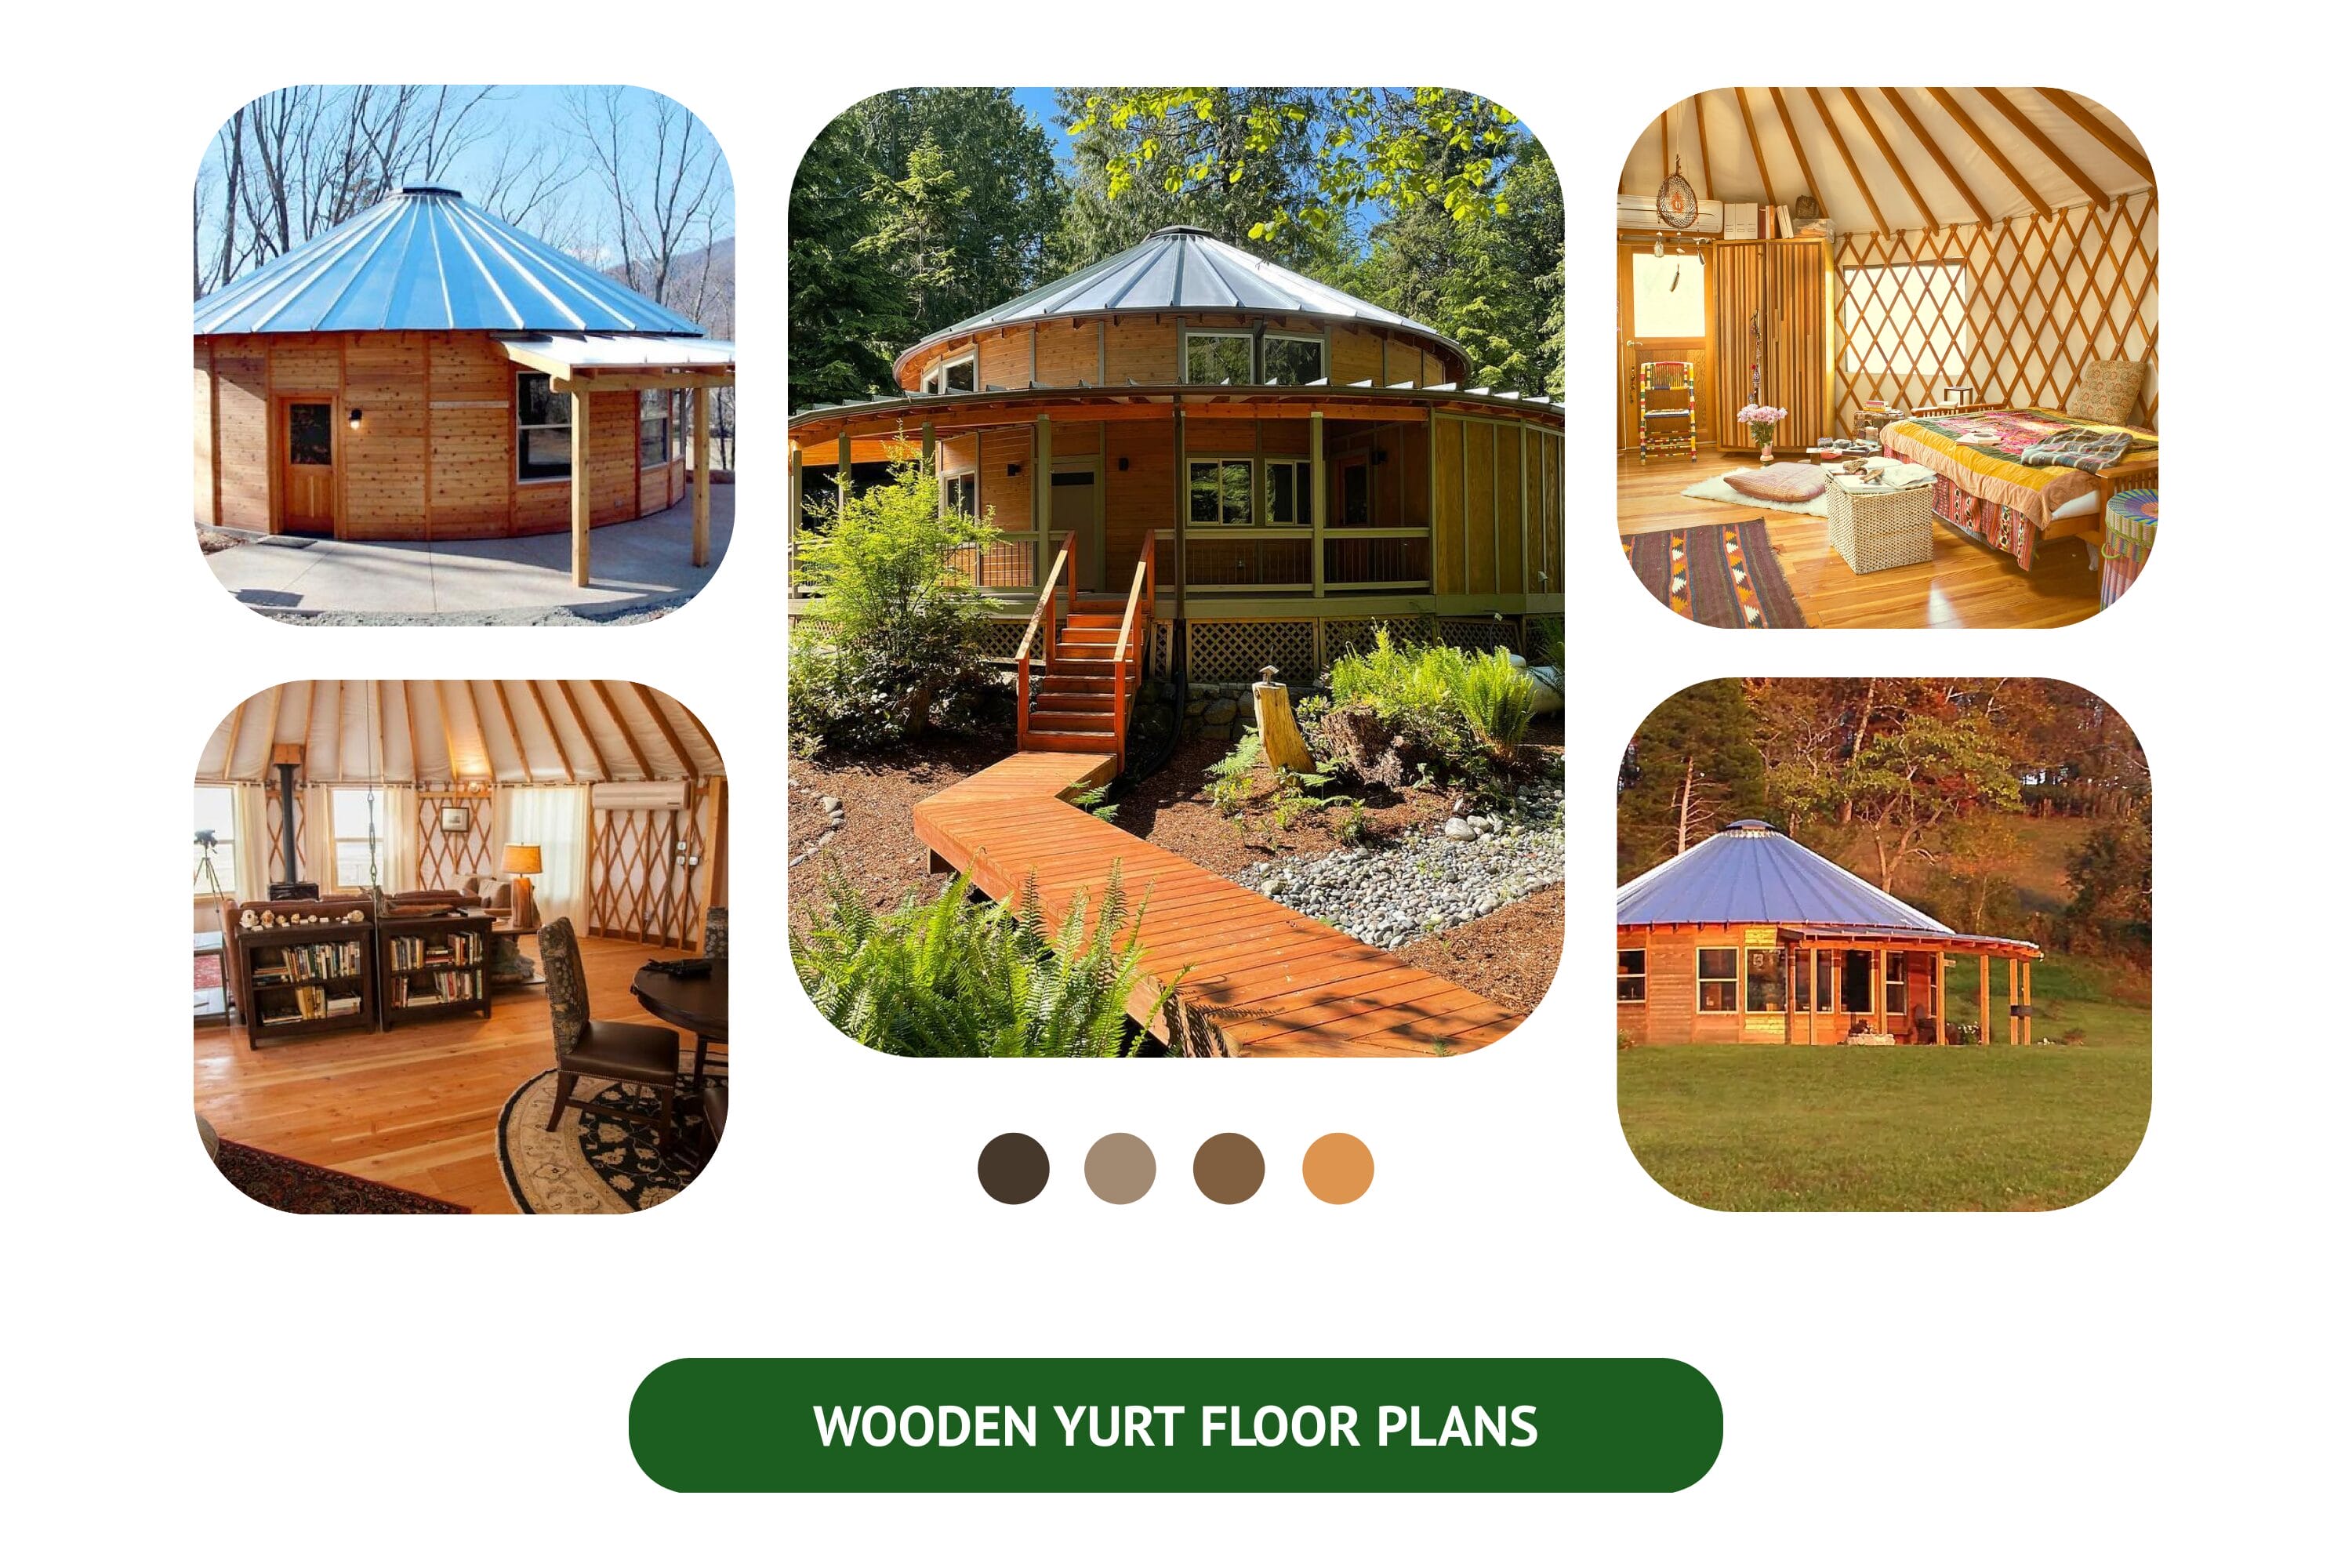 Designs for Wooden Yurt Flooring